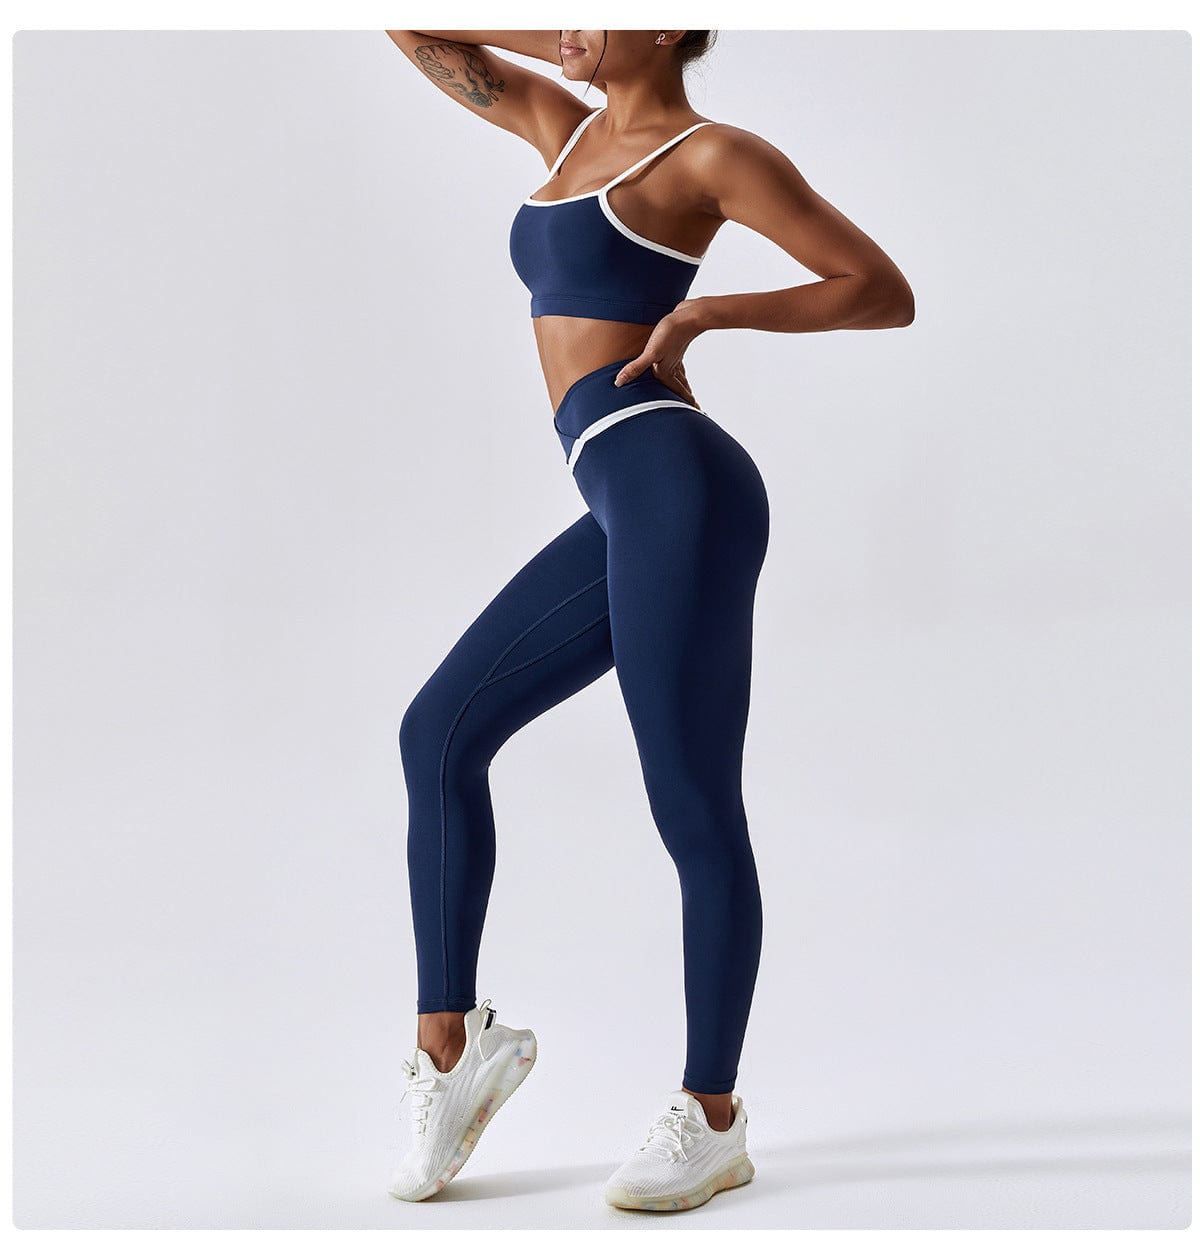 Clothes Like Gymsharkwomen's Yoga Set - Nylon Gym Clothes With